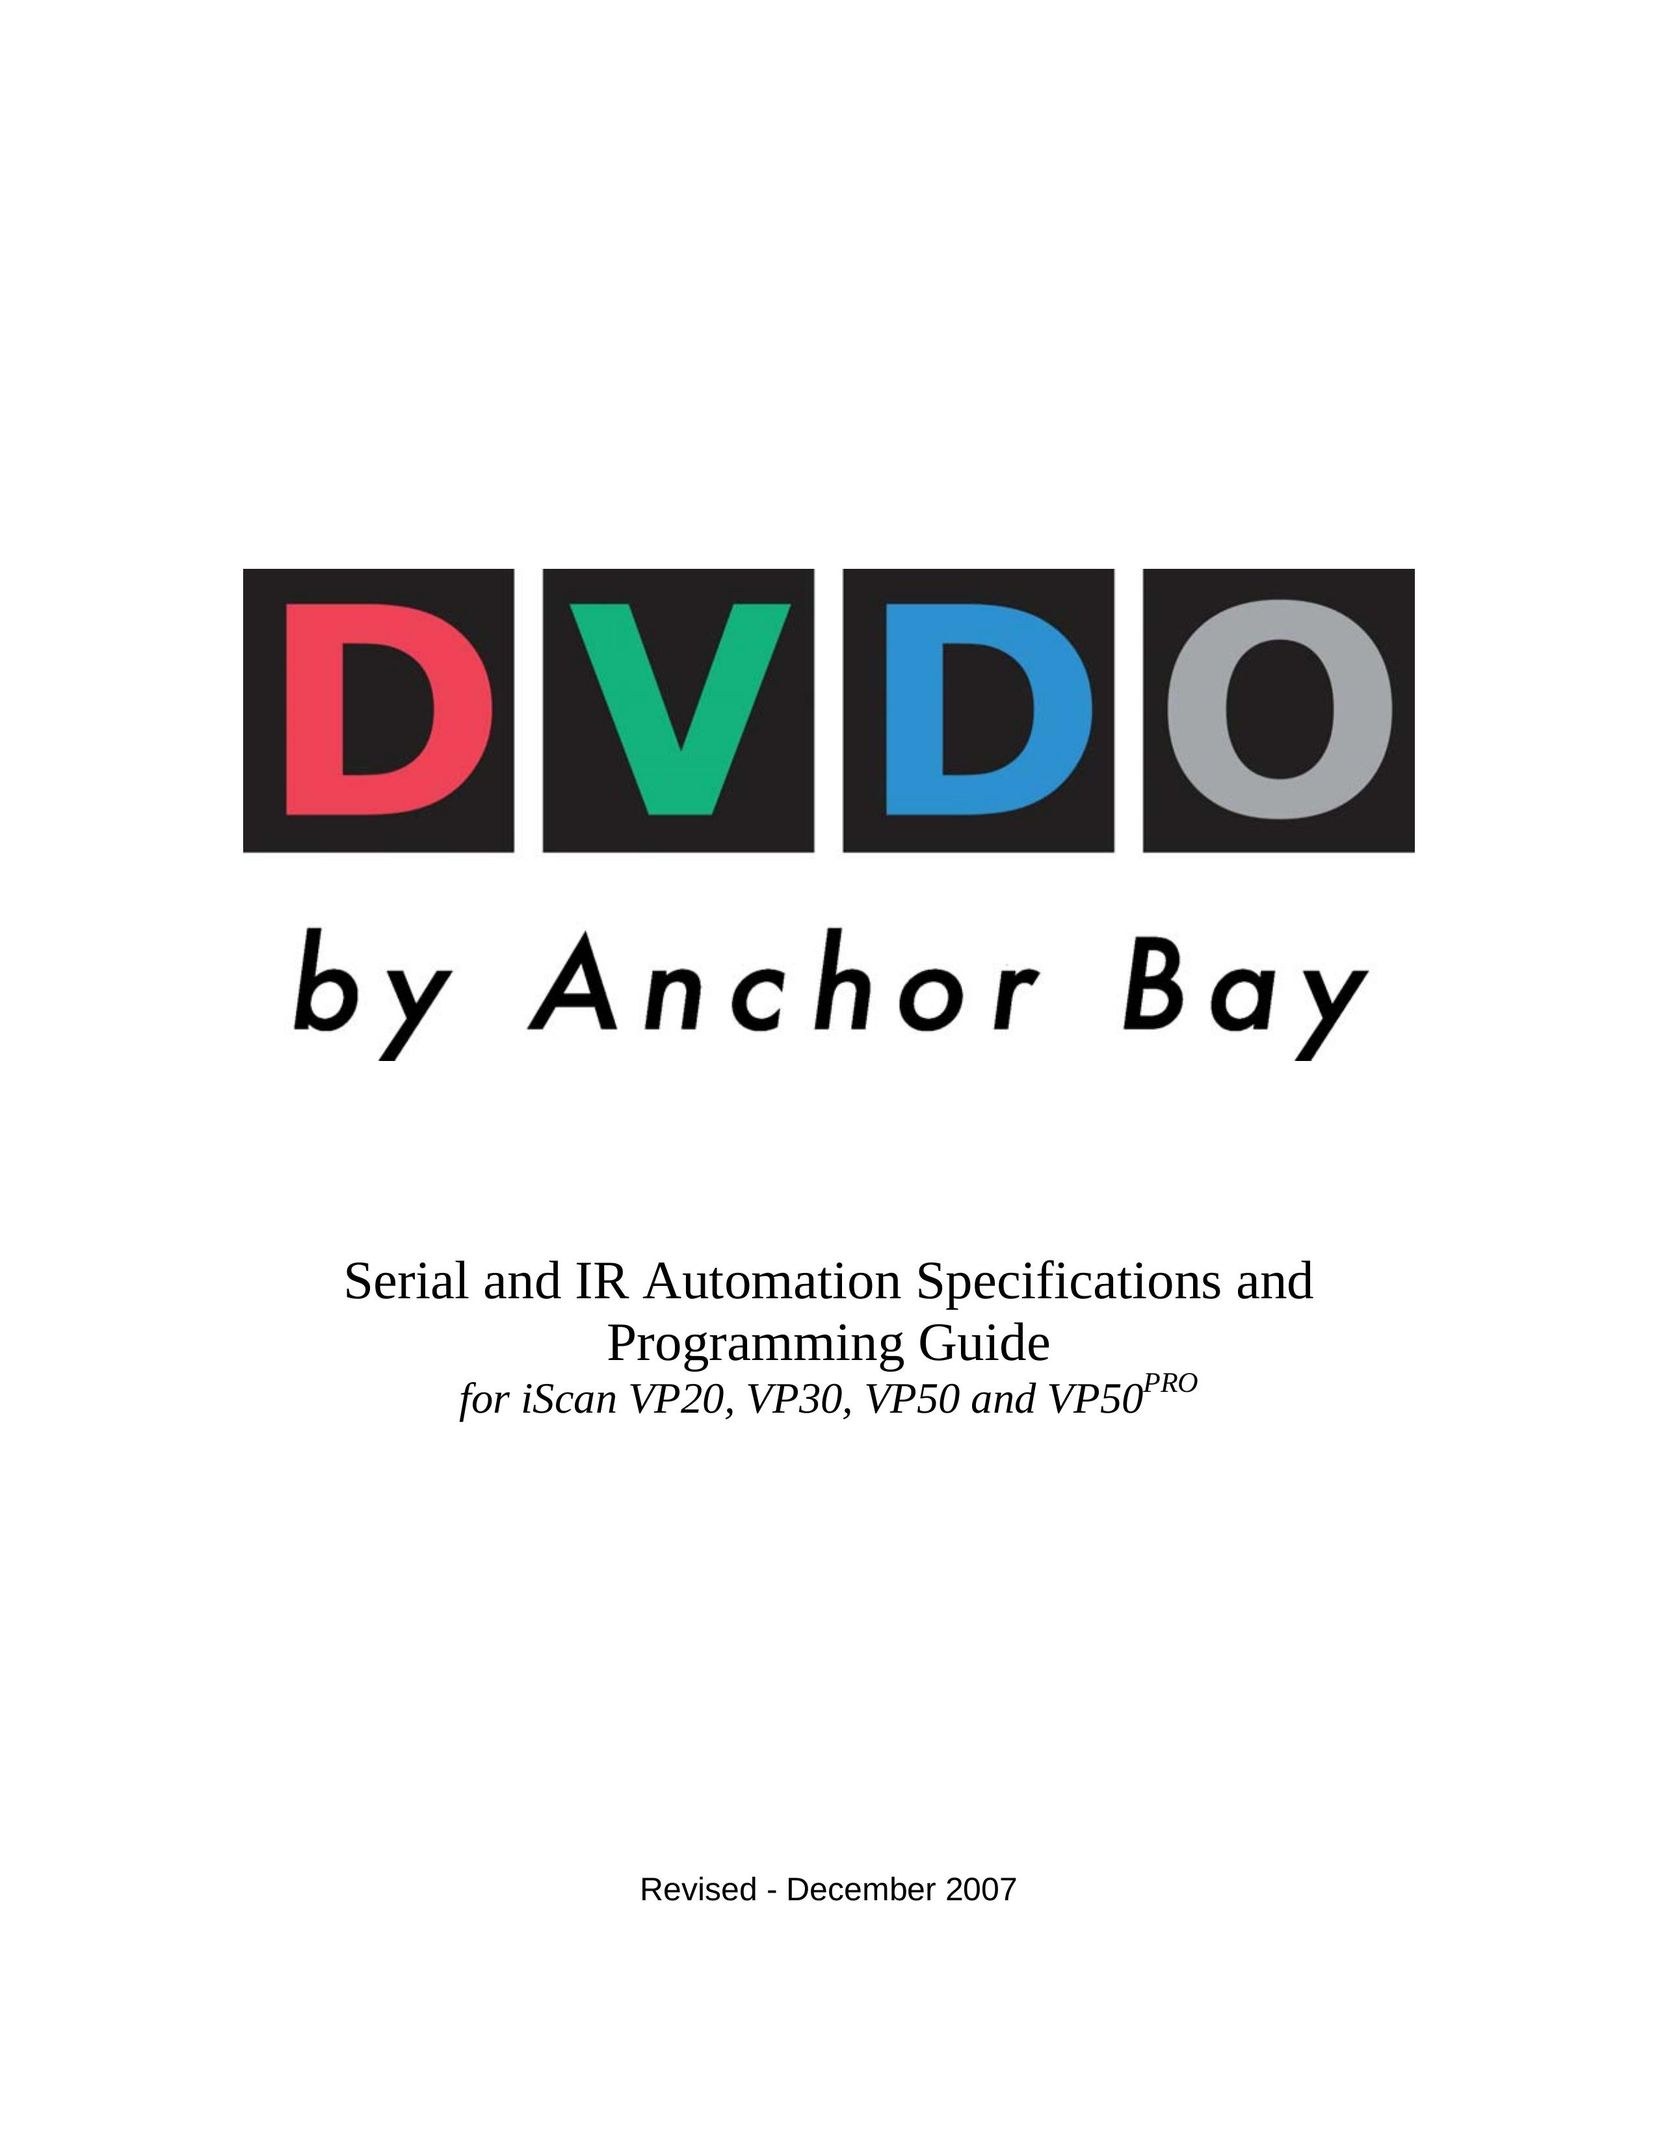 DVDO VP50 TV Video Accessories User Manual